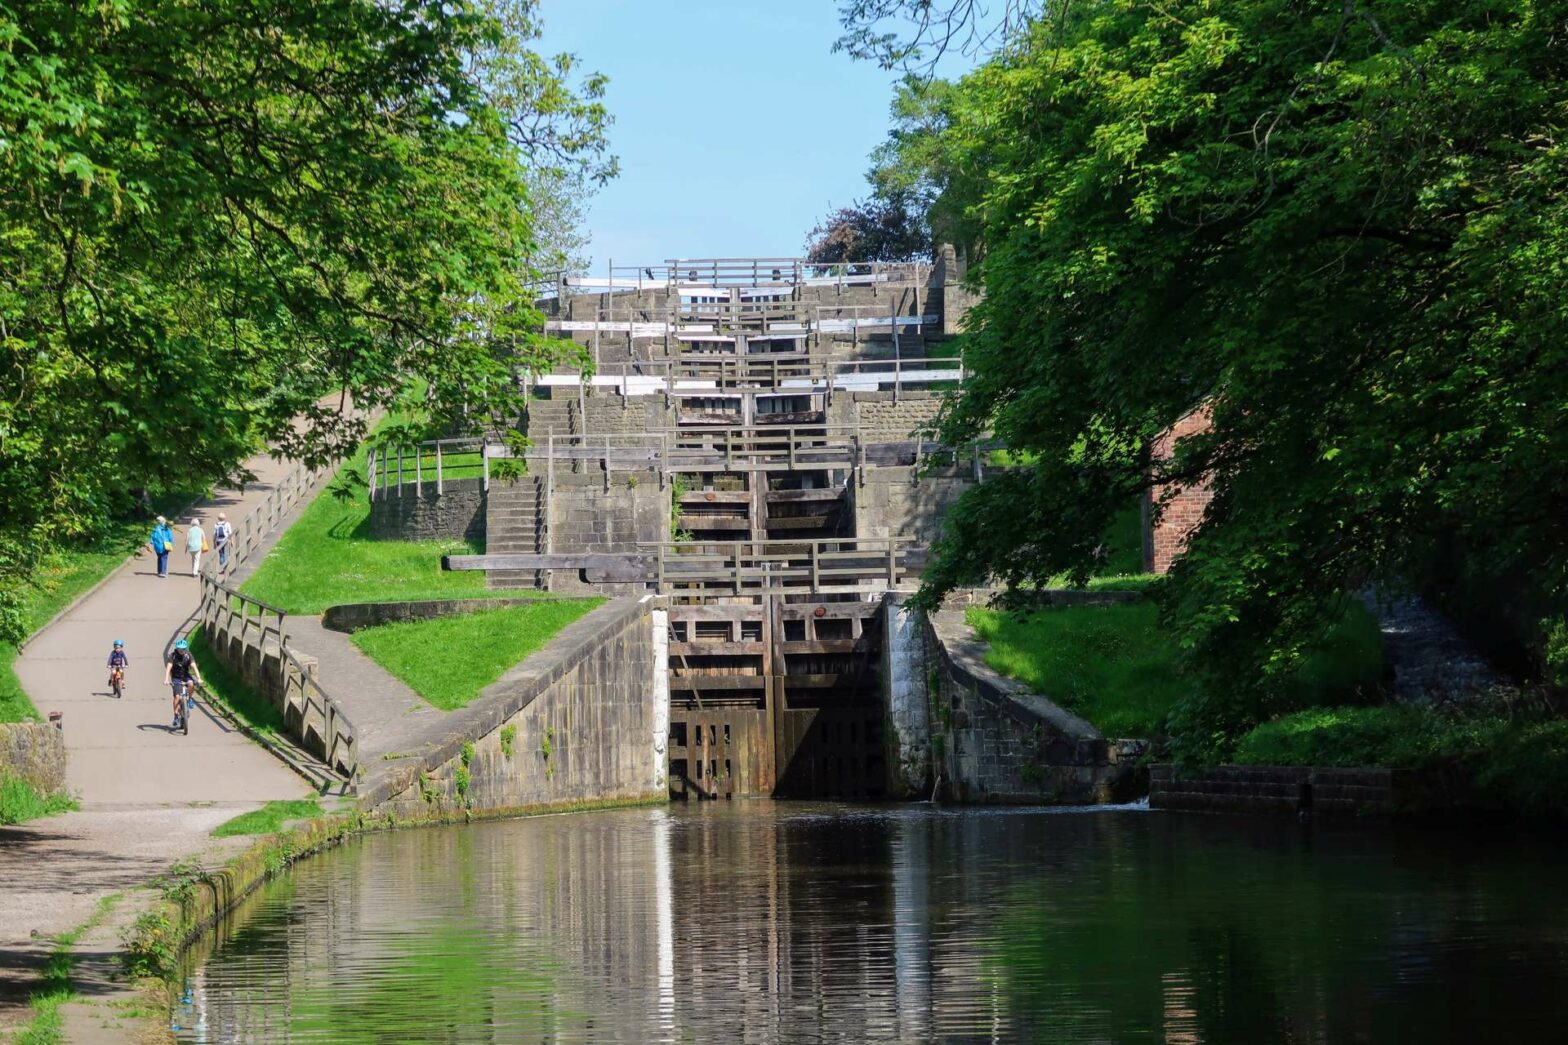 View of Bingley Five Rise Locks